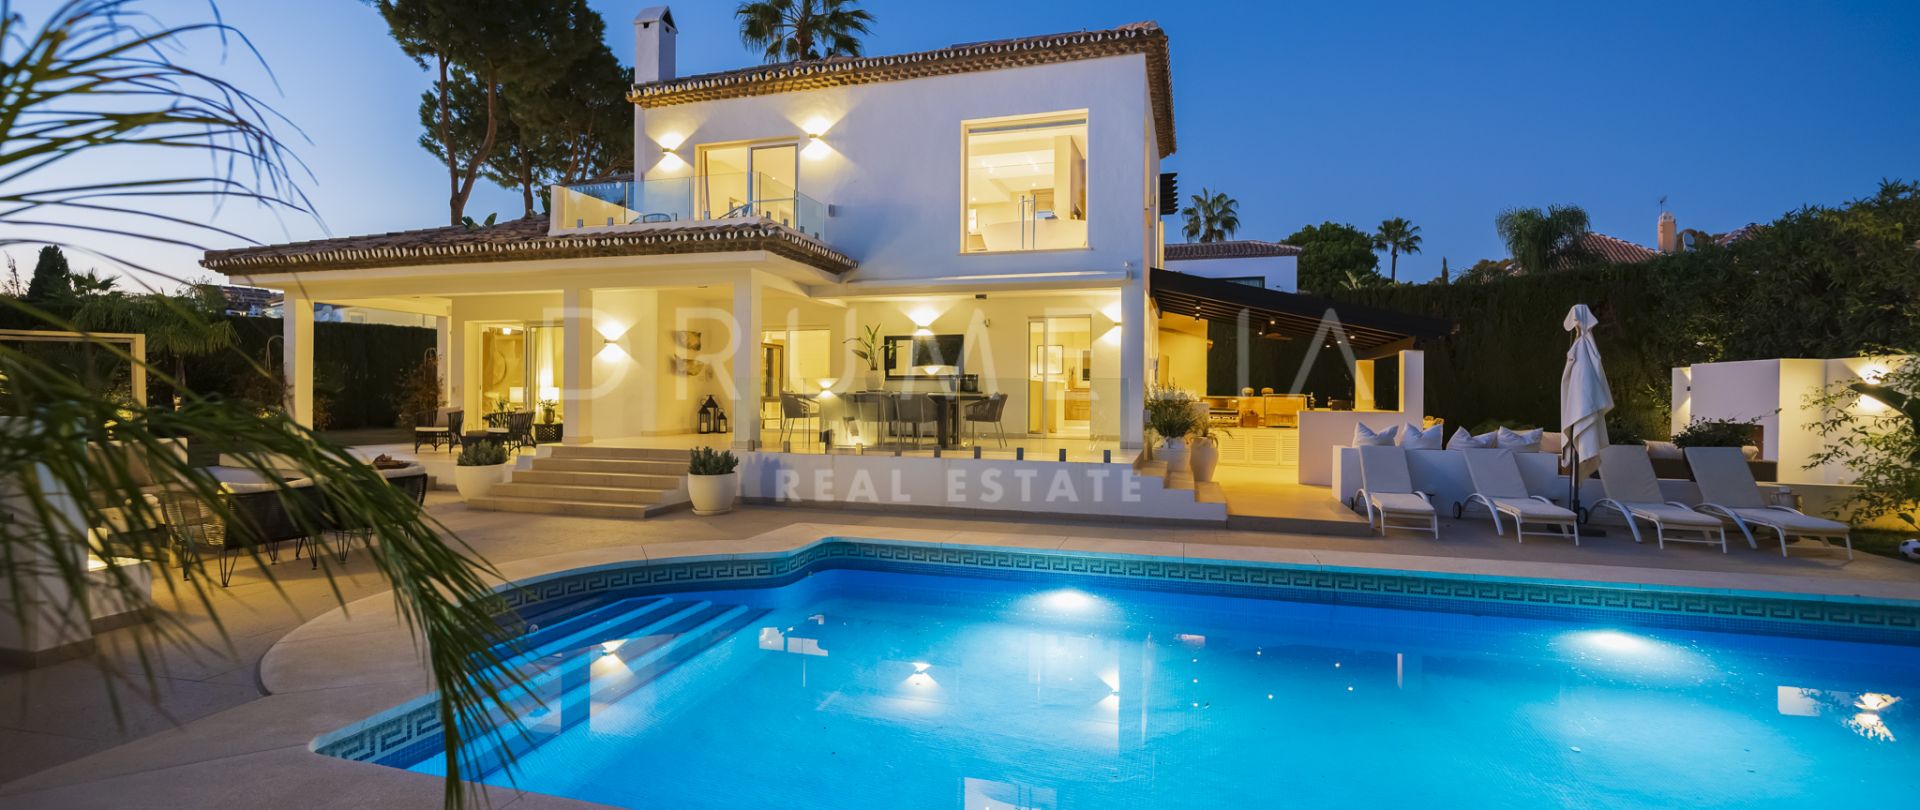 Charmante villa in Andalusische stijl met modern en luxueus interieur in Marbella Country Club